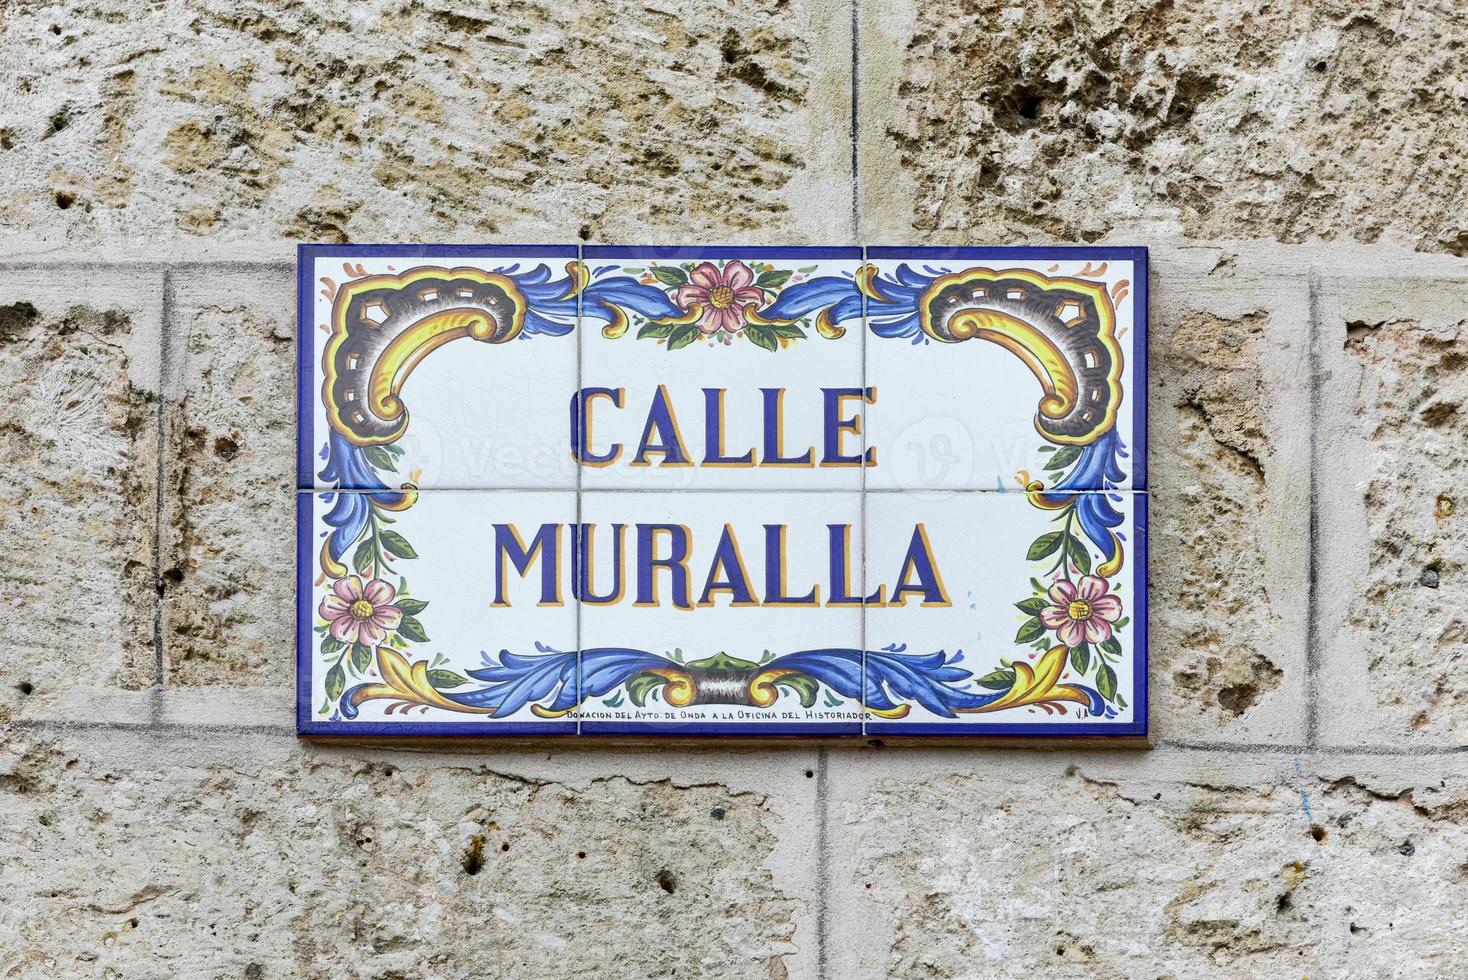 Sign for Calle Muralla in Plaza Vieja in Old Havana, Cuba. photo